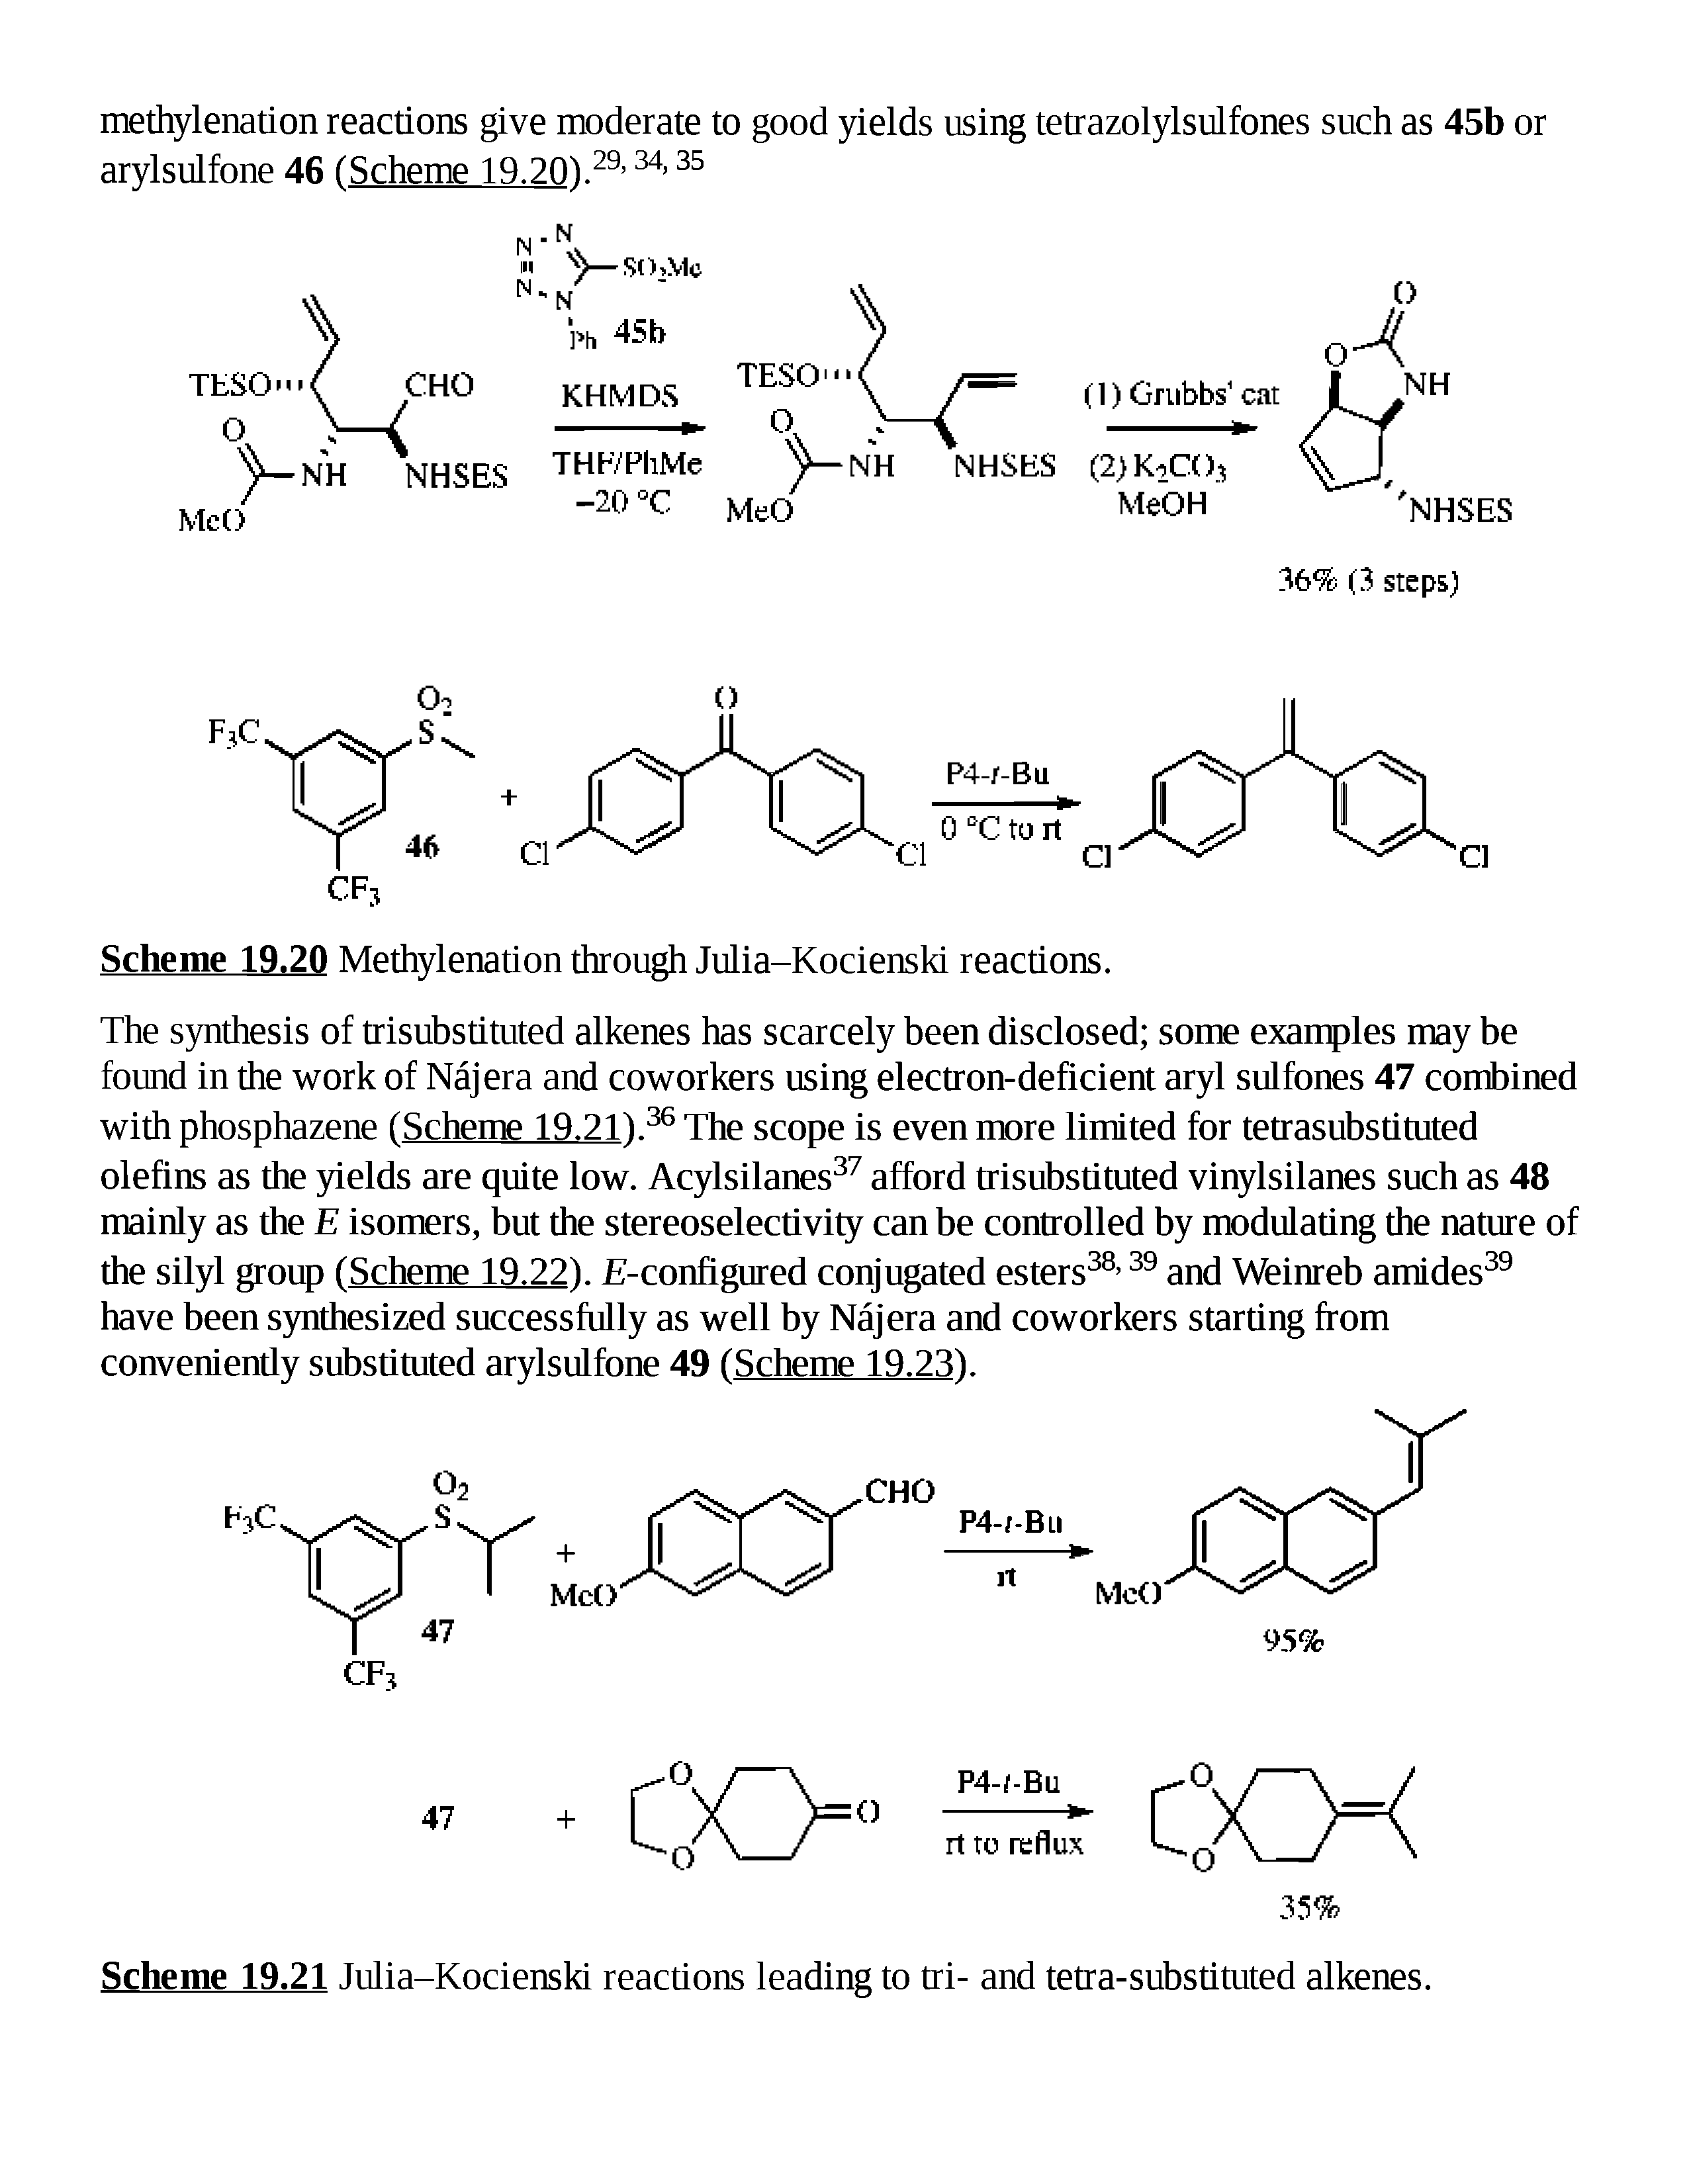 Scheme 19.21 Julia-Kocienski reactions leading to tri- and tetra-substituted alkenes.